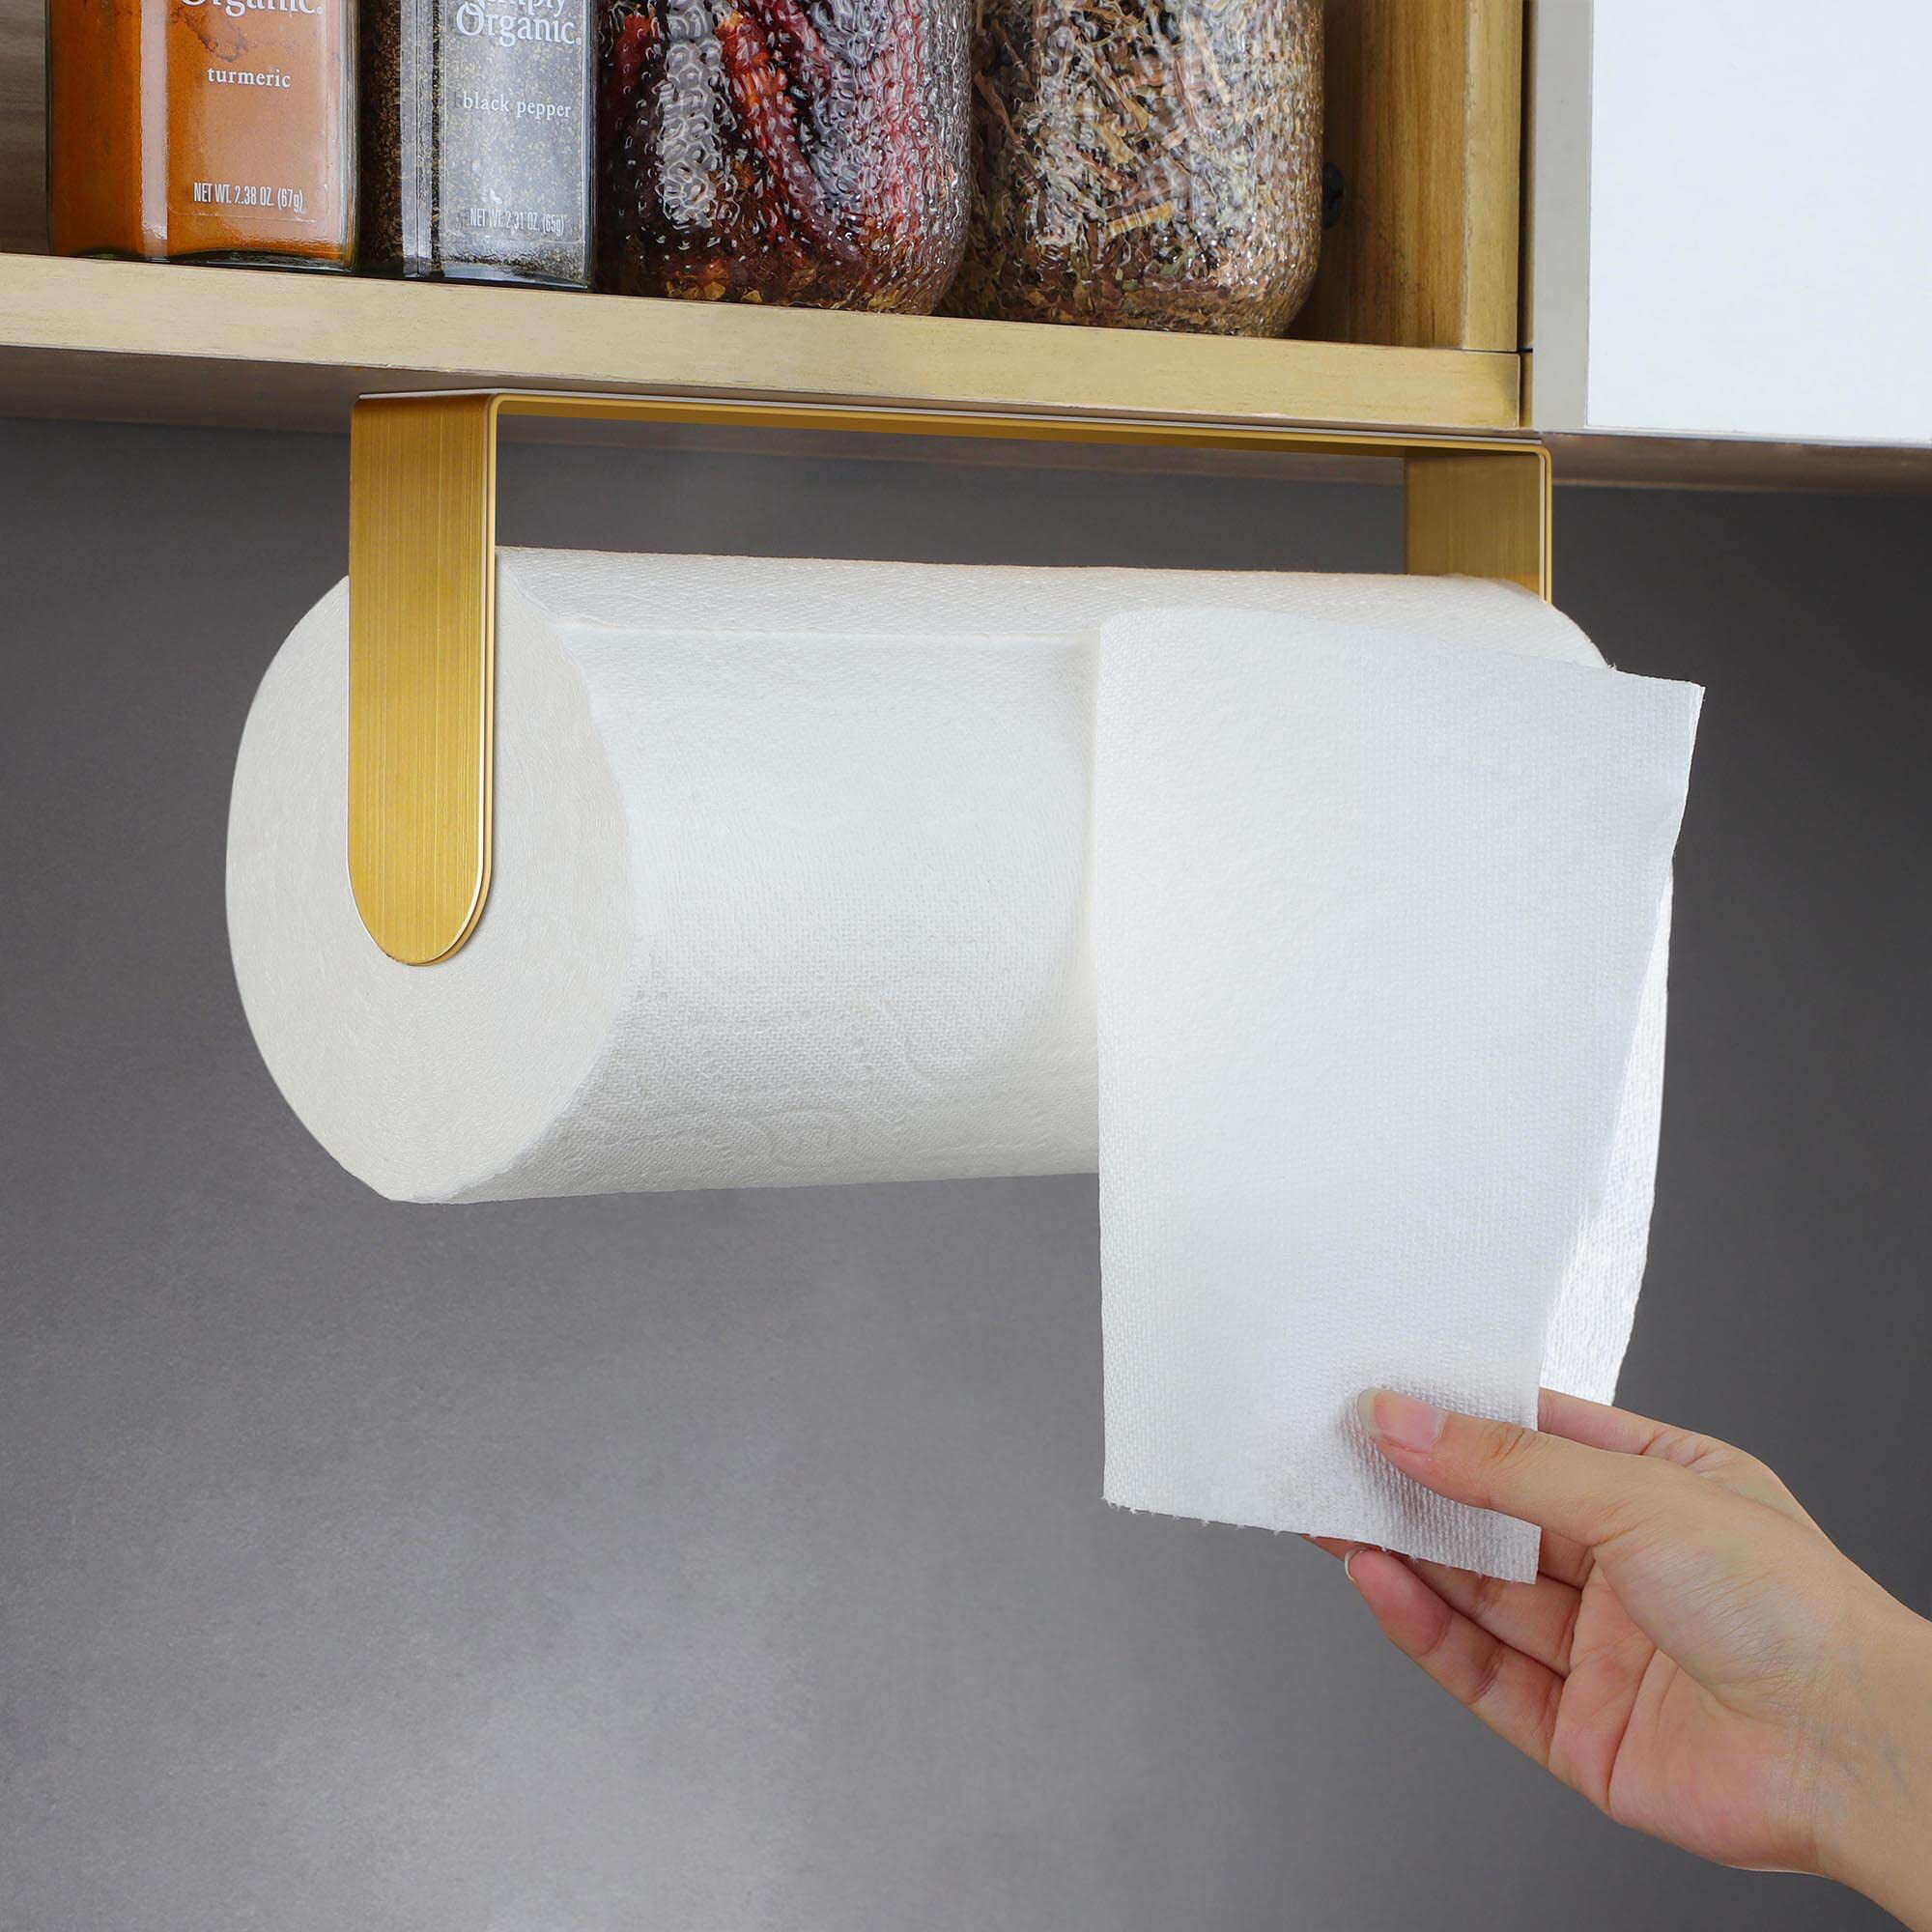 YIGII Paper Towel Holder Under Cabinet KH017Y